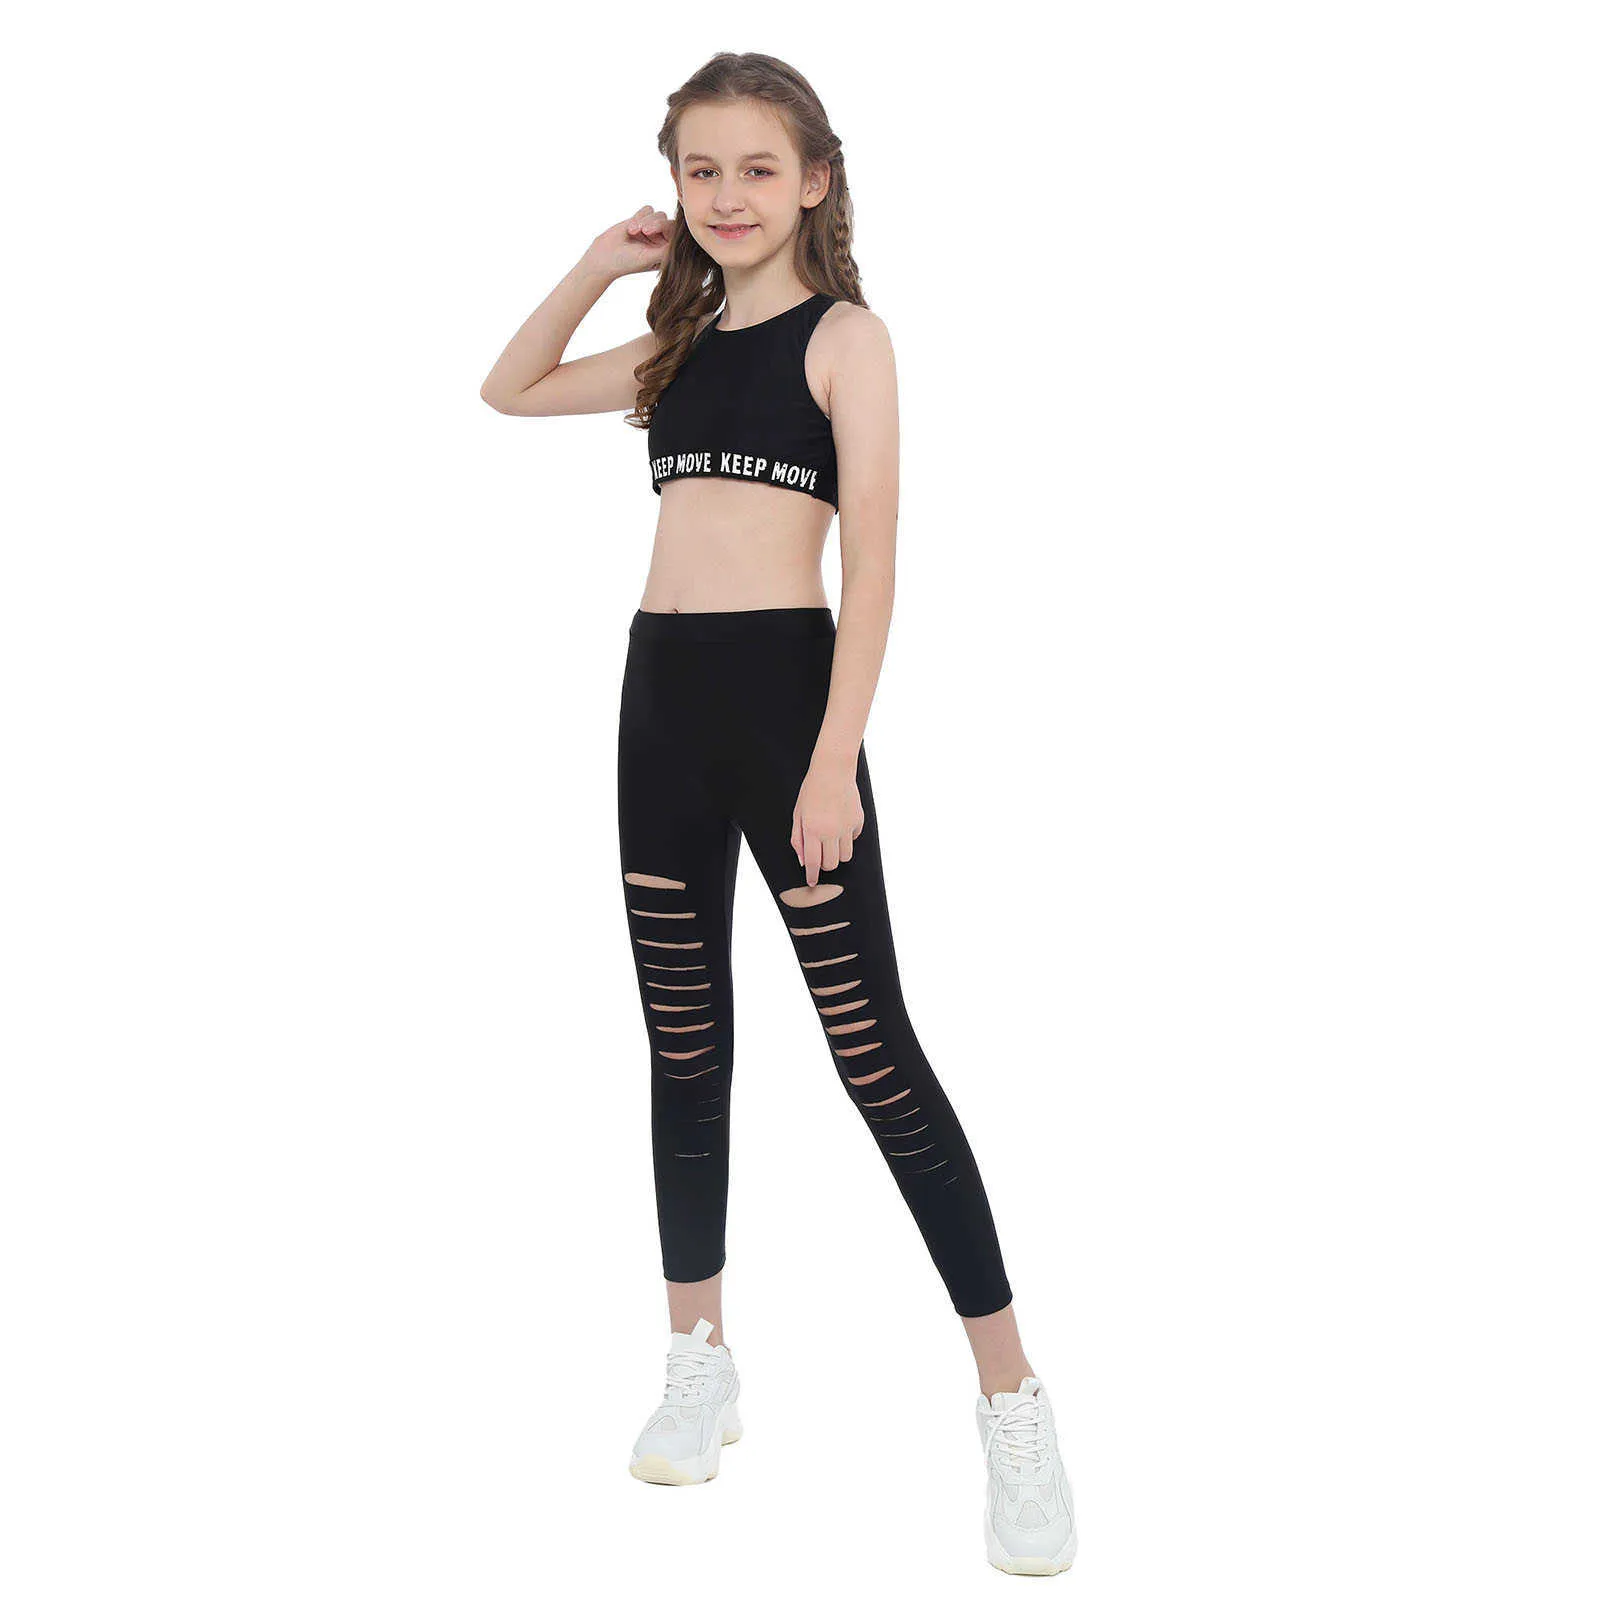 Kids Girl Summer Crop Top Vests Bra Shorts Bottom Gym Yoga Sports Running  Outfit 